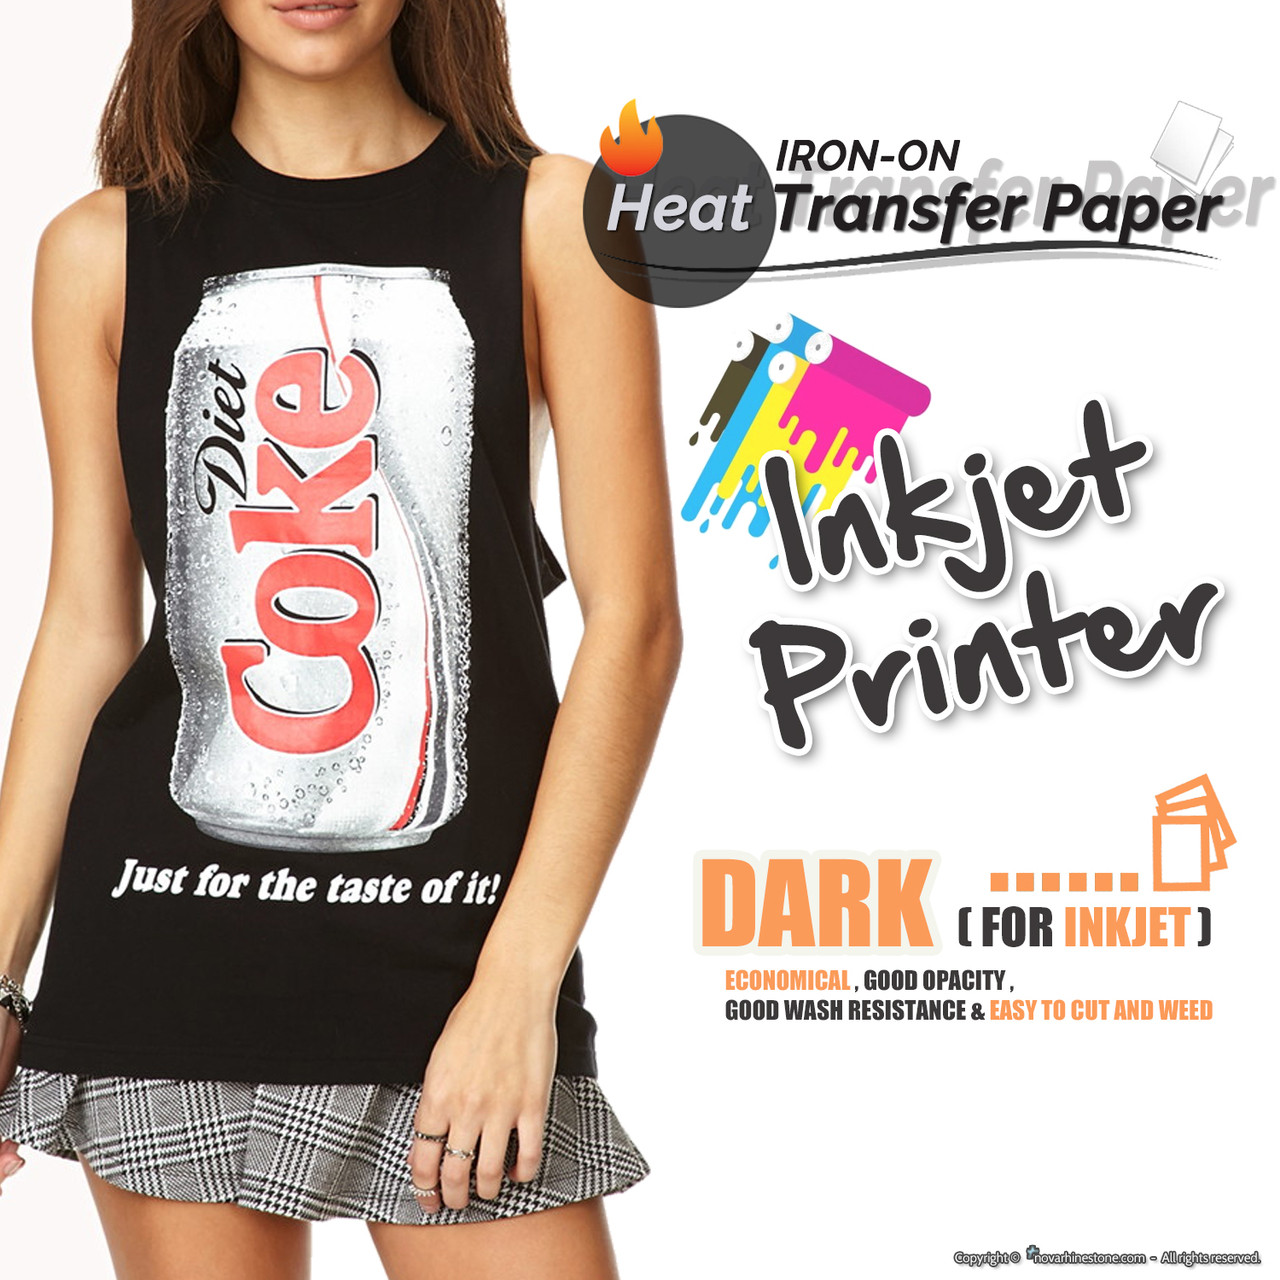 Inkjet Printing for Dark Cotton Fabric (3G Heat Transfer Paper) 8.5 x 11  - 25 Sheets